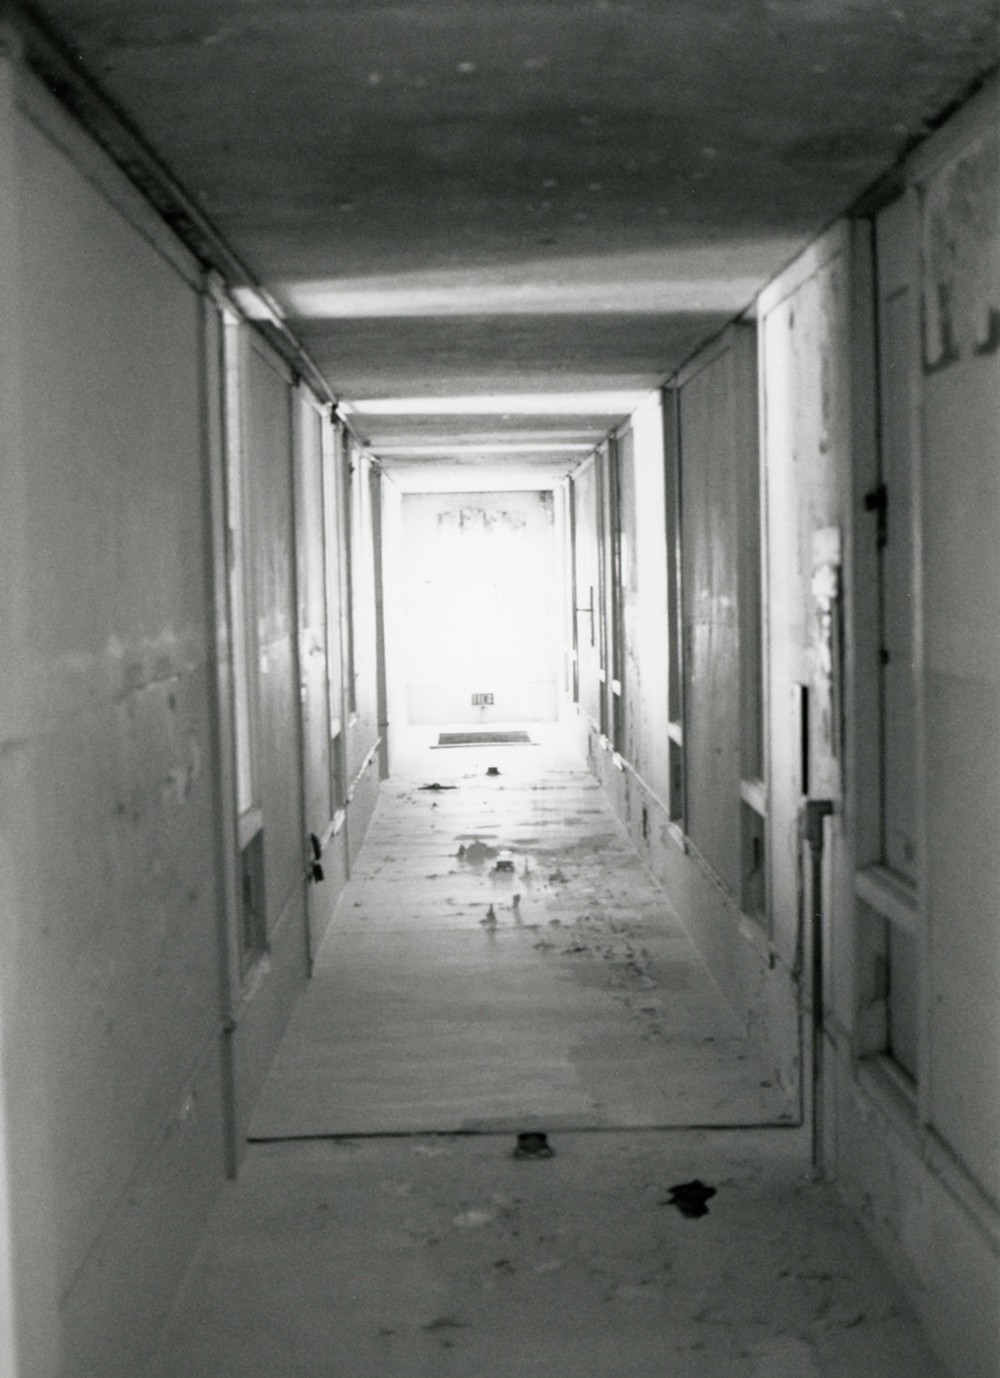 New Alcazar Hotel - Central Building, Clarksdale Mississippi Upper floor corridor (1994)